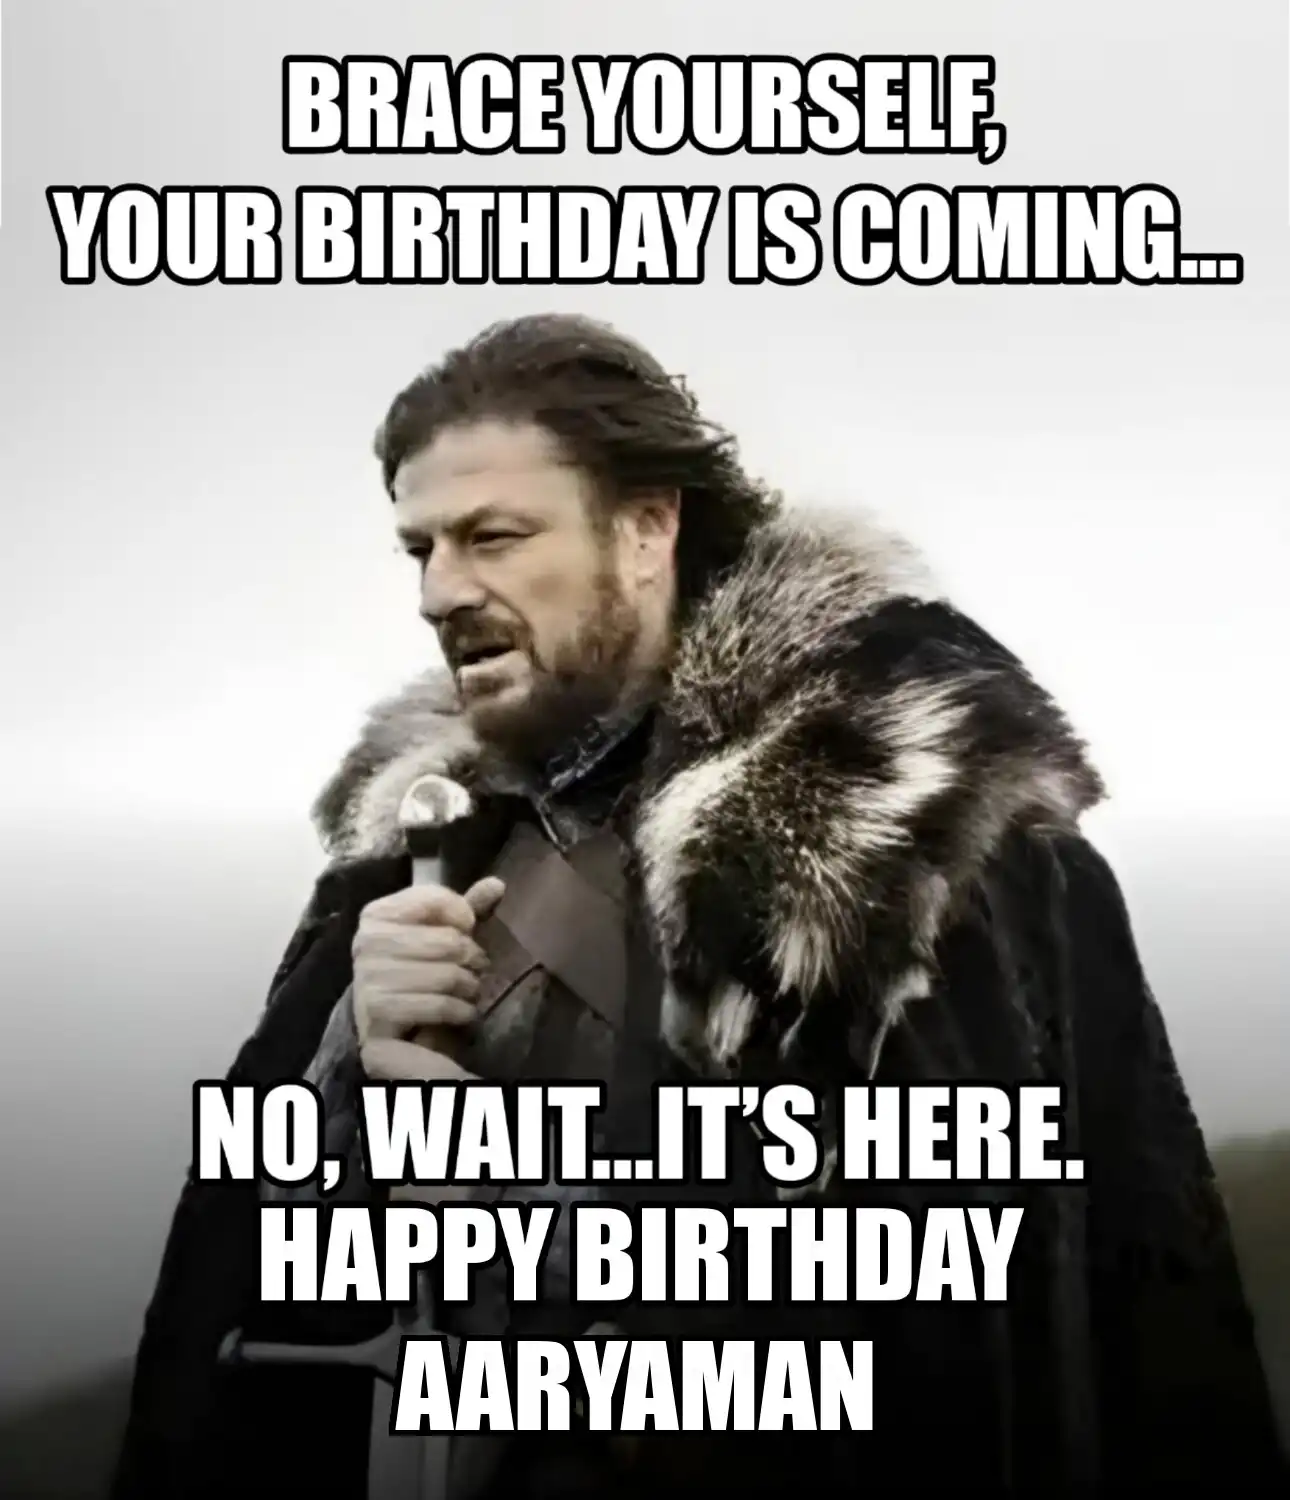 Happy Birthday Aaryaman Brace Yourself Your Birthday Is Coming Meme